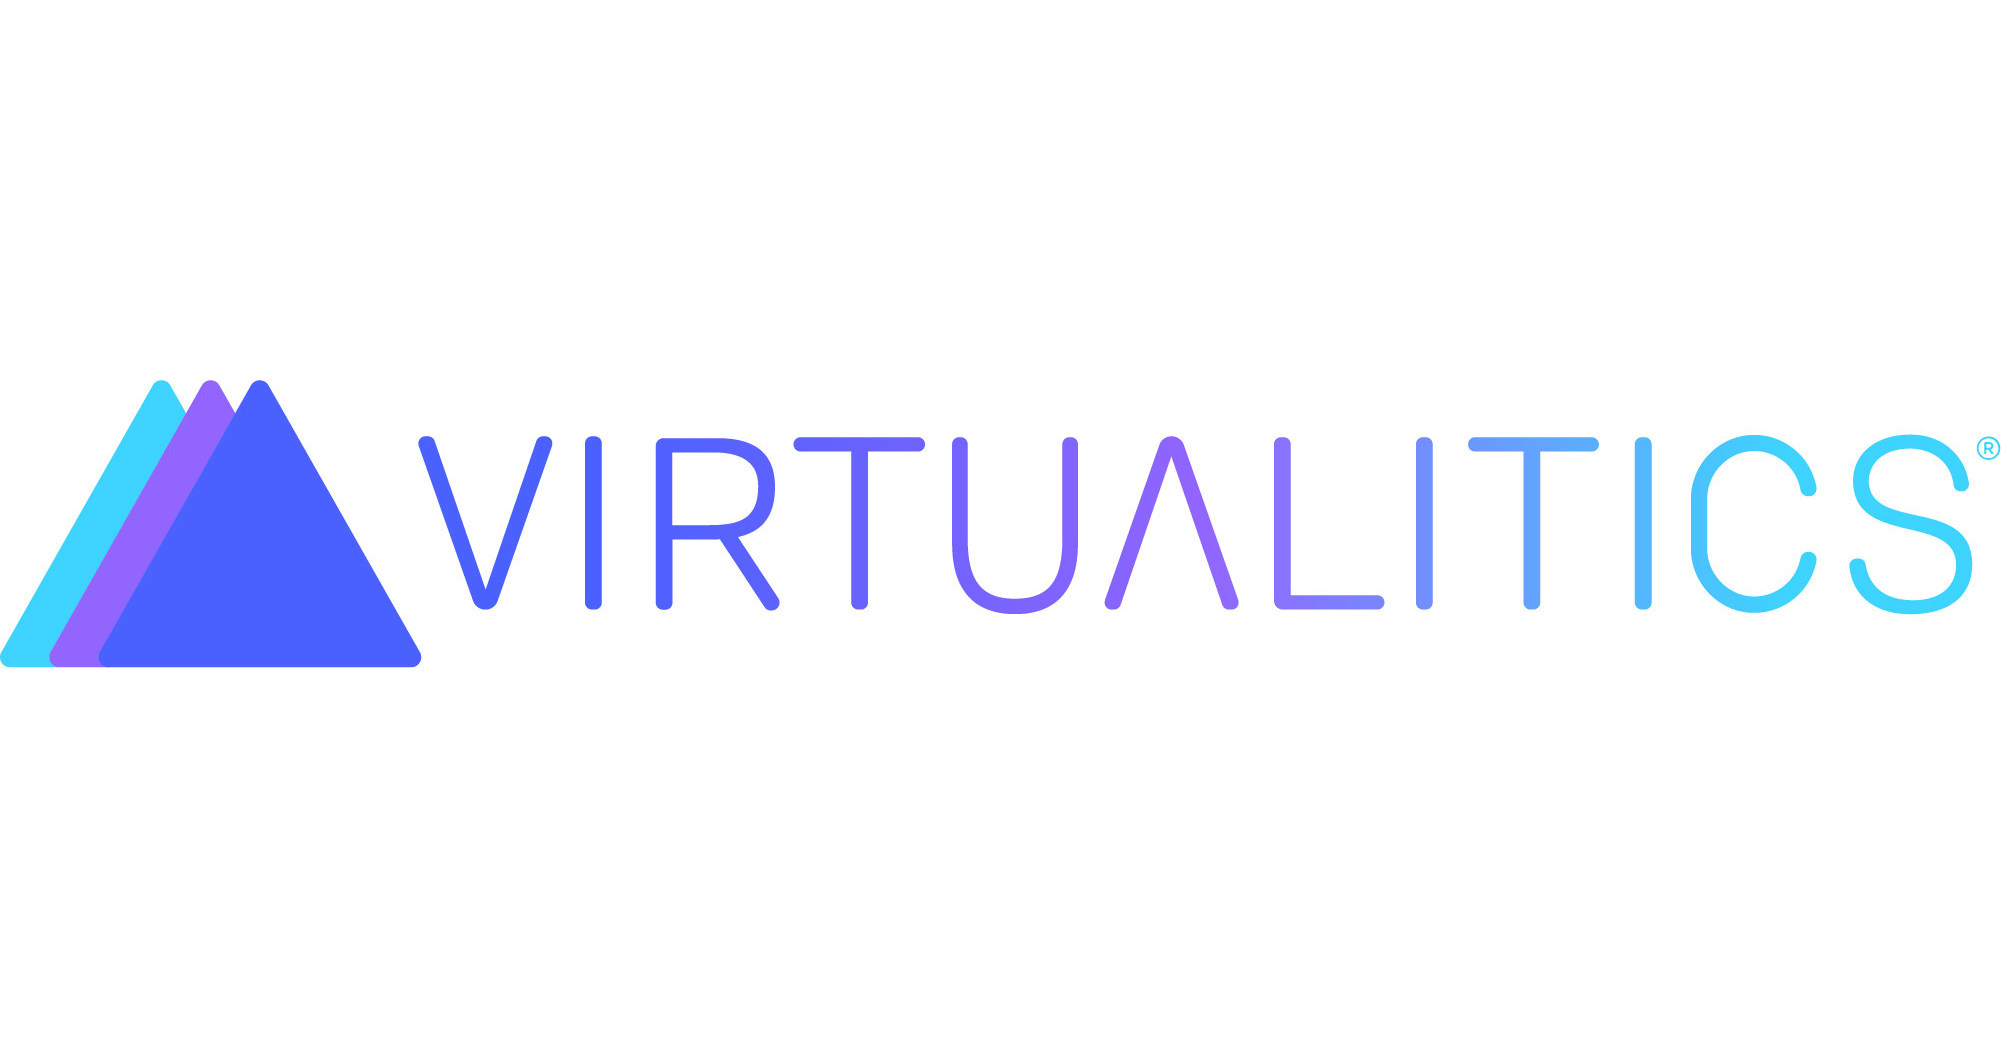 Virtualitics logo